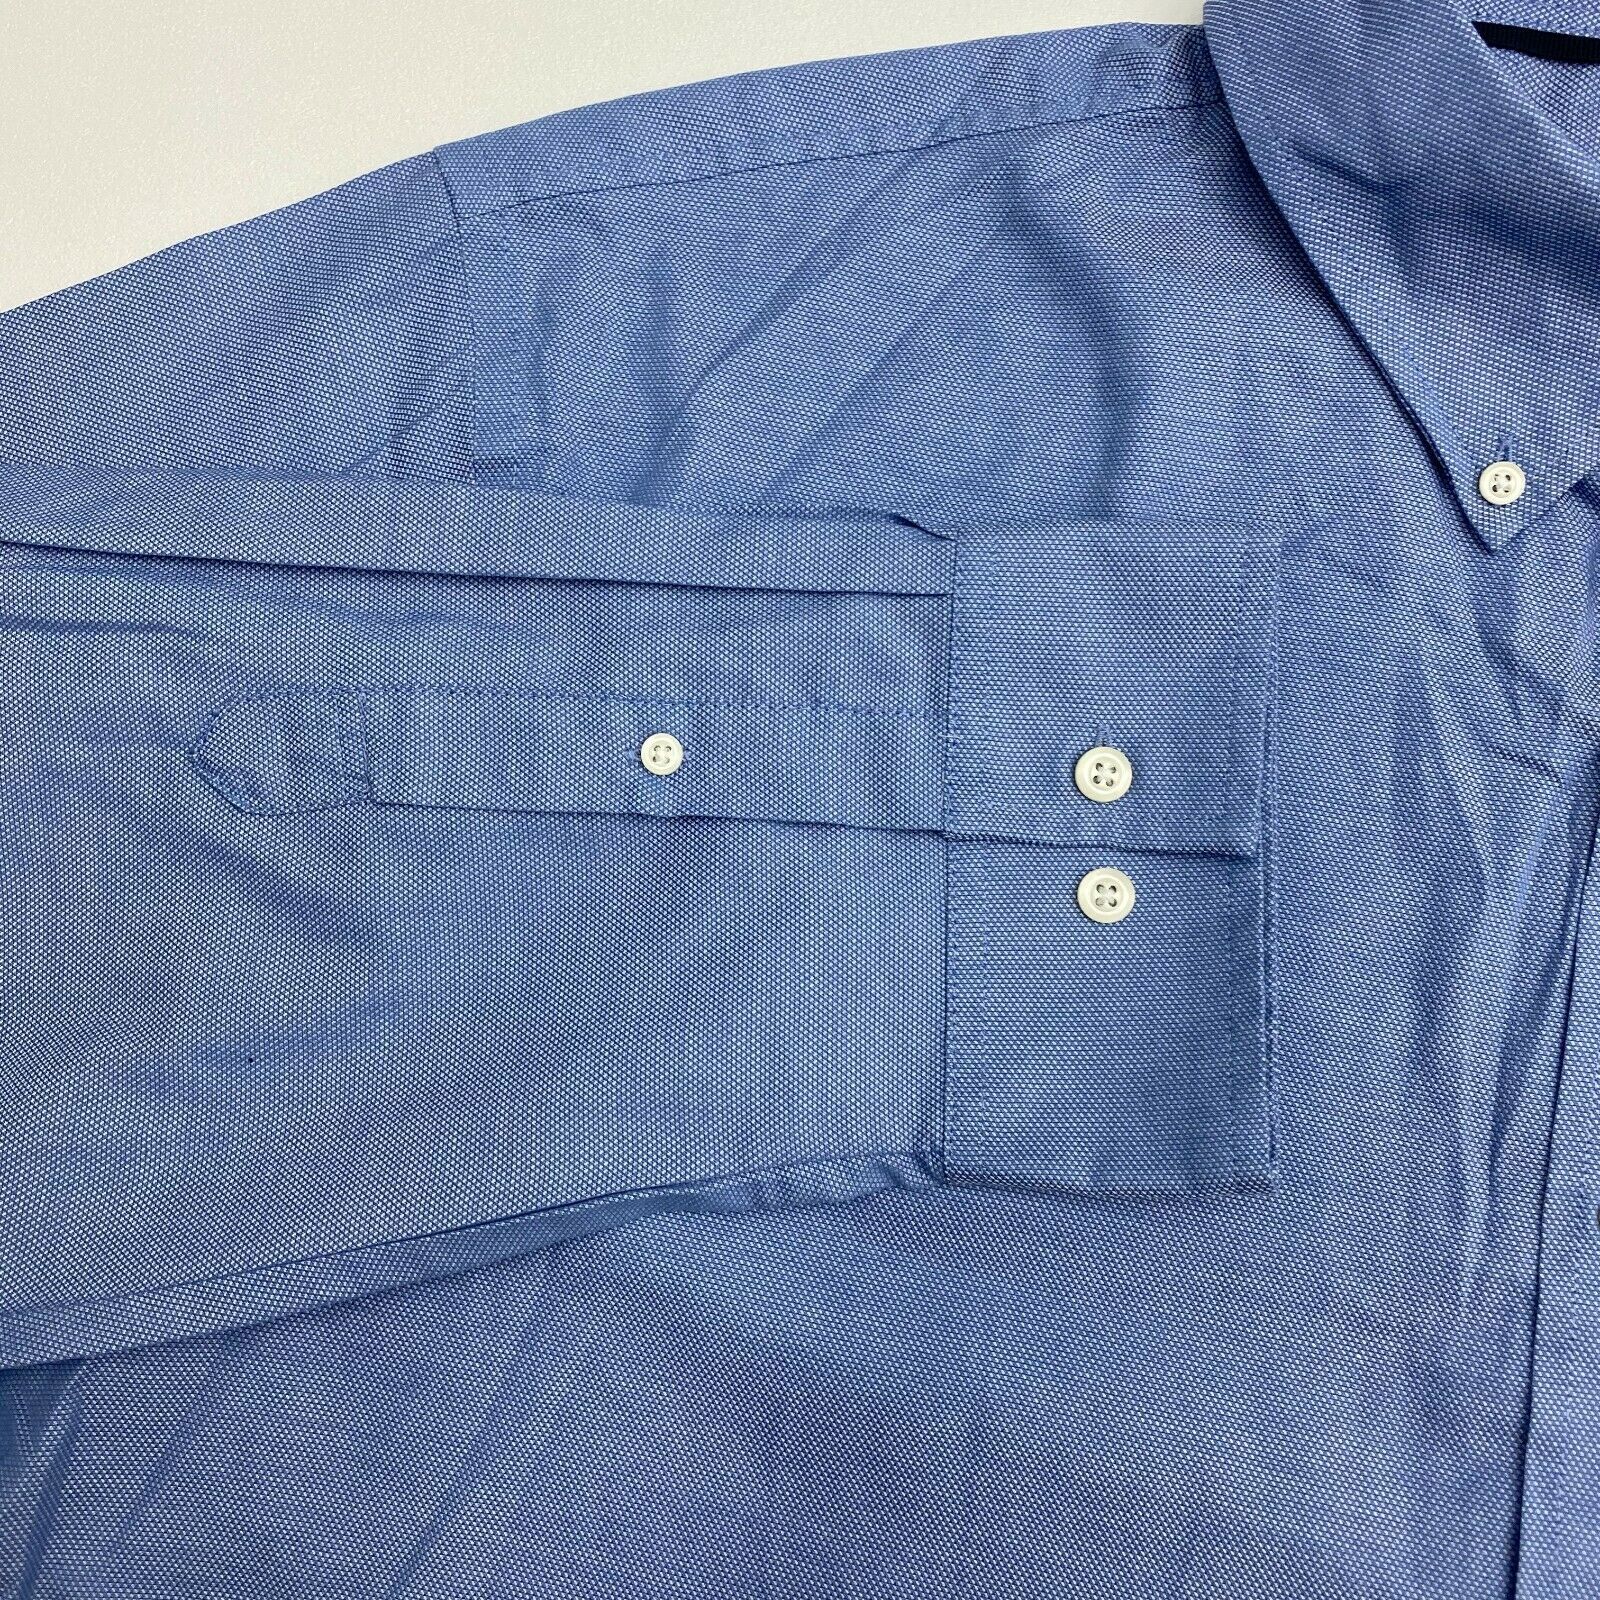 Croft & Barrow Button Up Shirt Mens XXL Blue Easy Care Long Sleeve ...